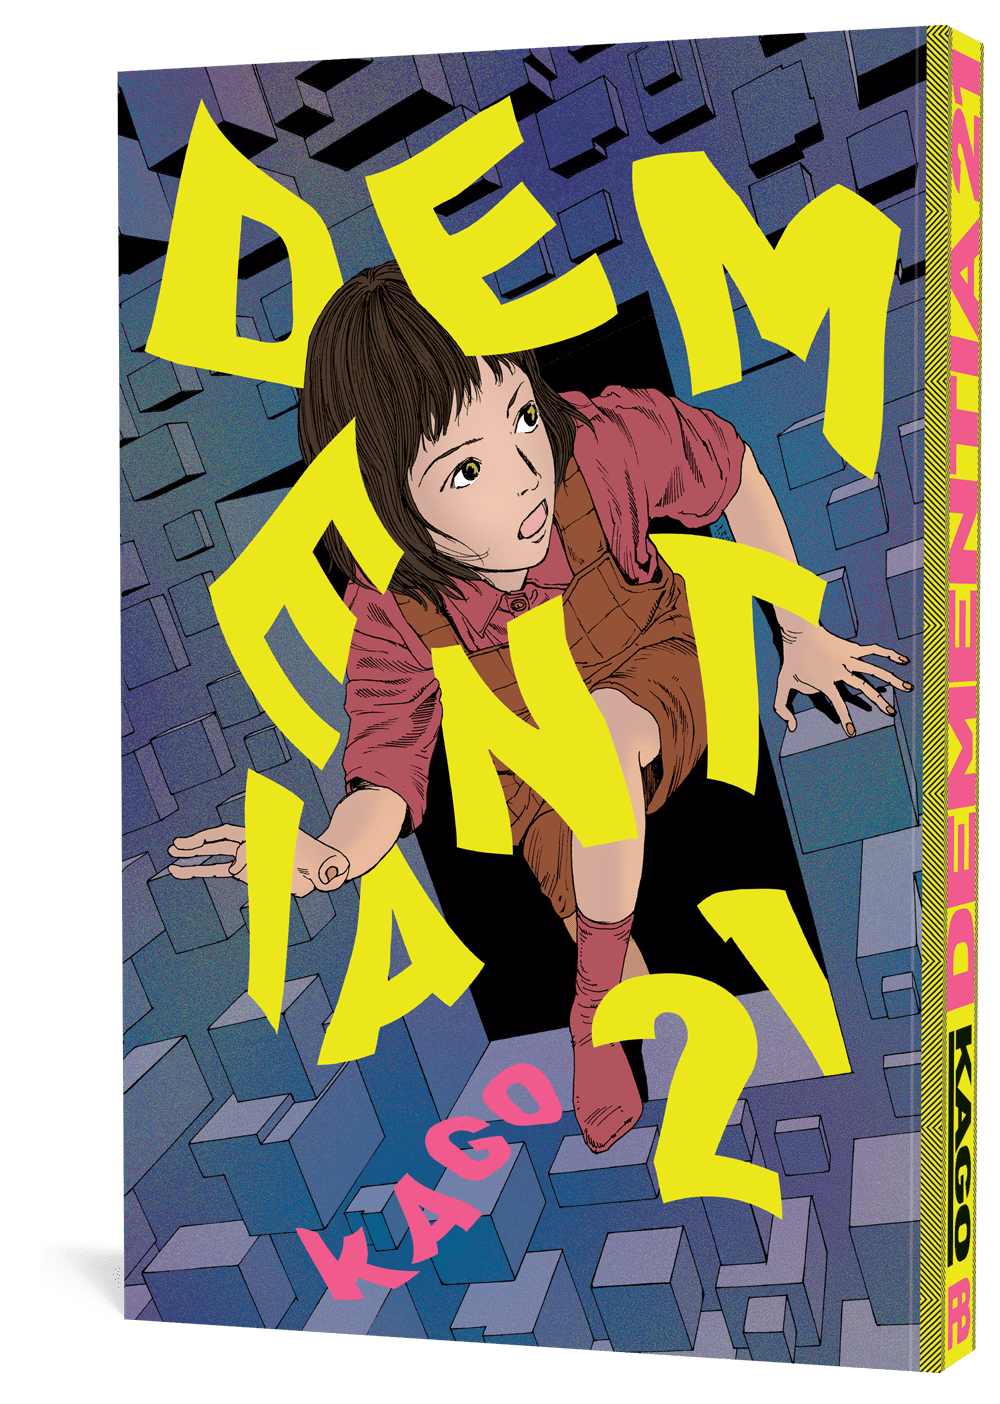 Dementia 21 Vol. 1 by Shintaro Kago & Rachel Thorn